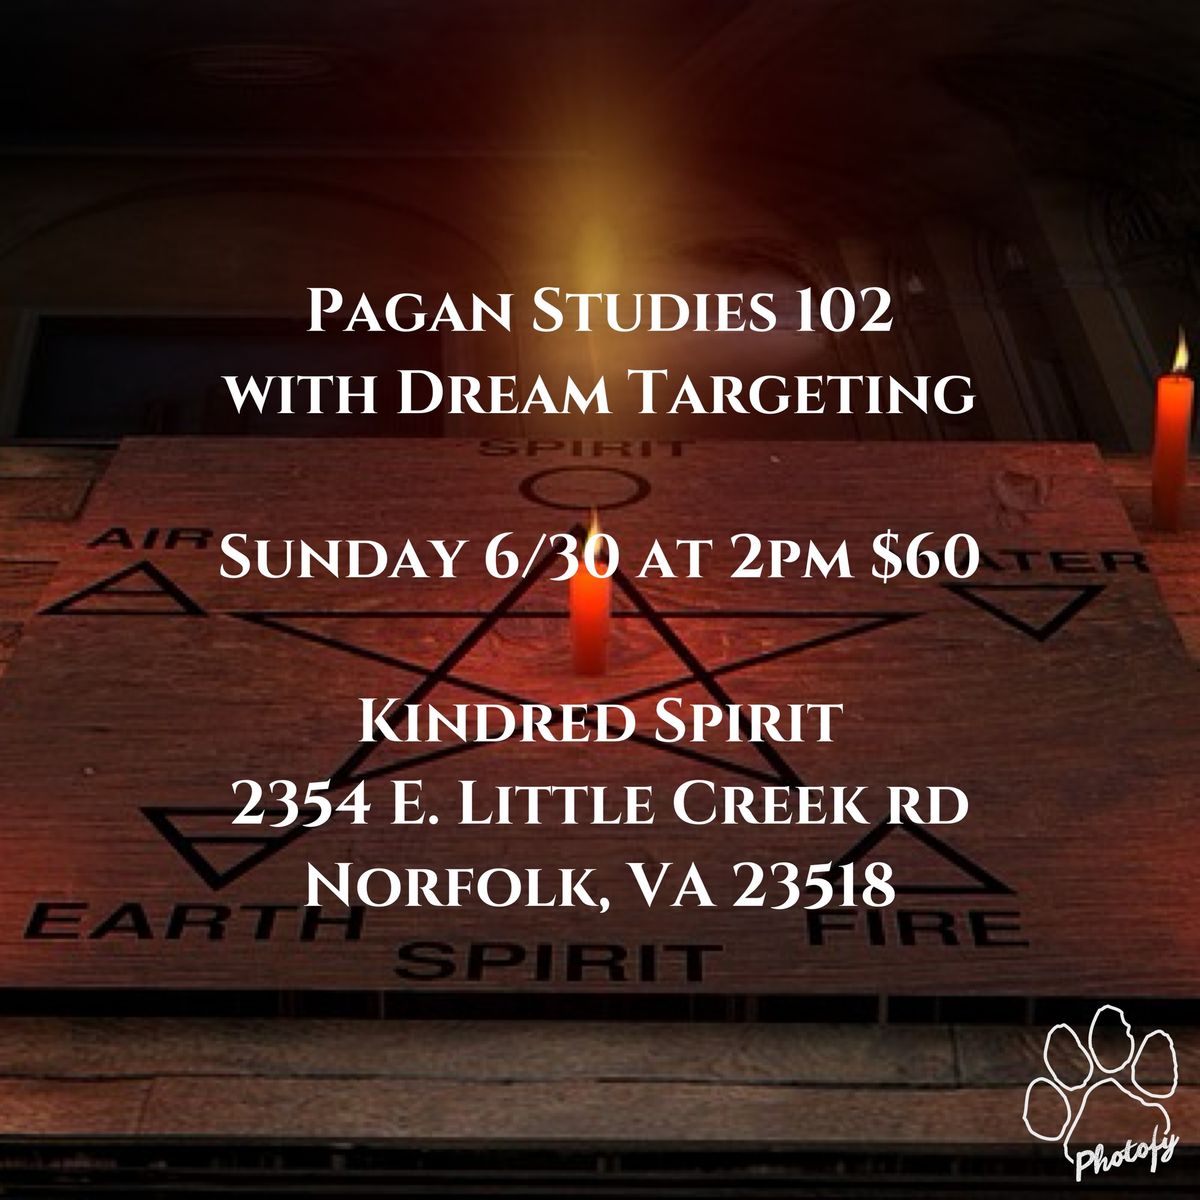 Pagan Studies 102 and Dream Targeting